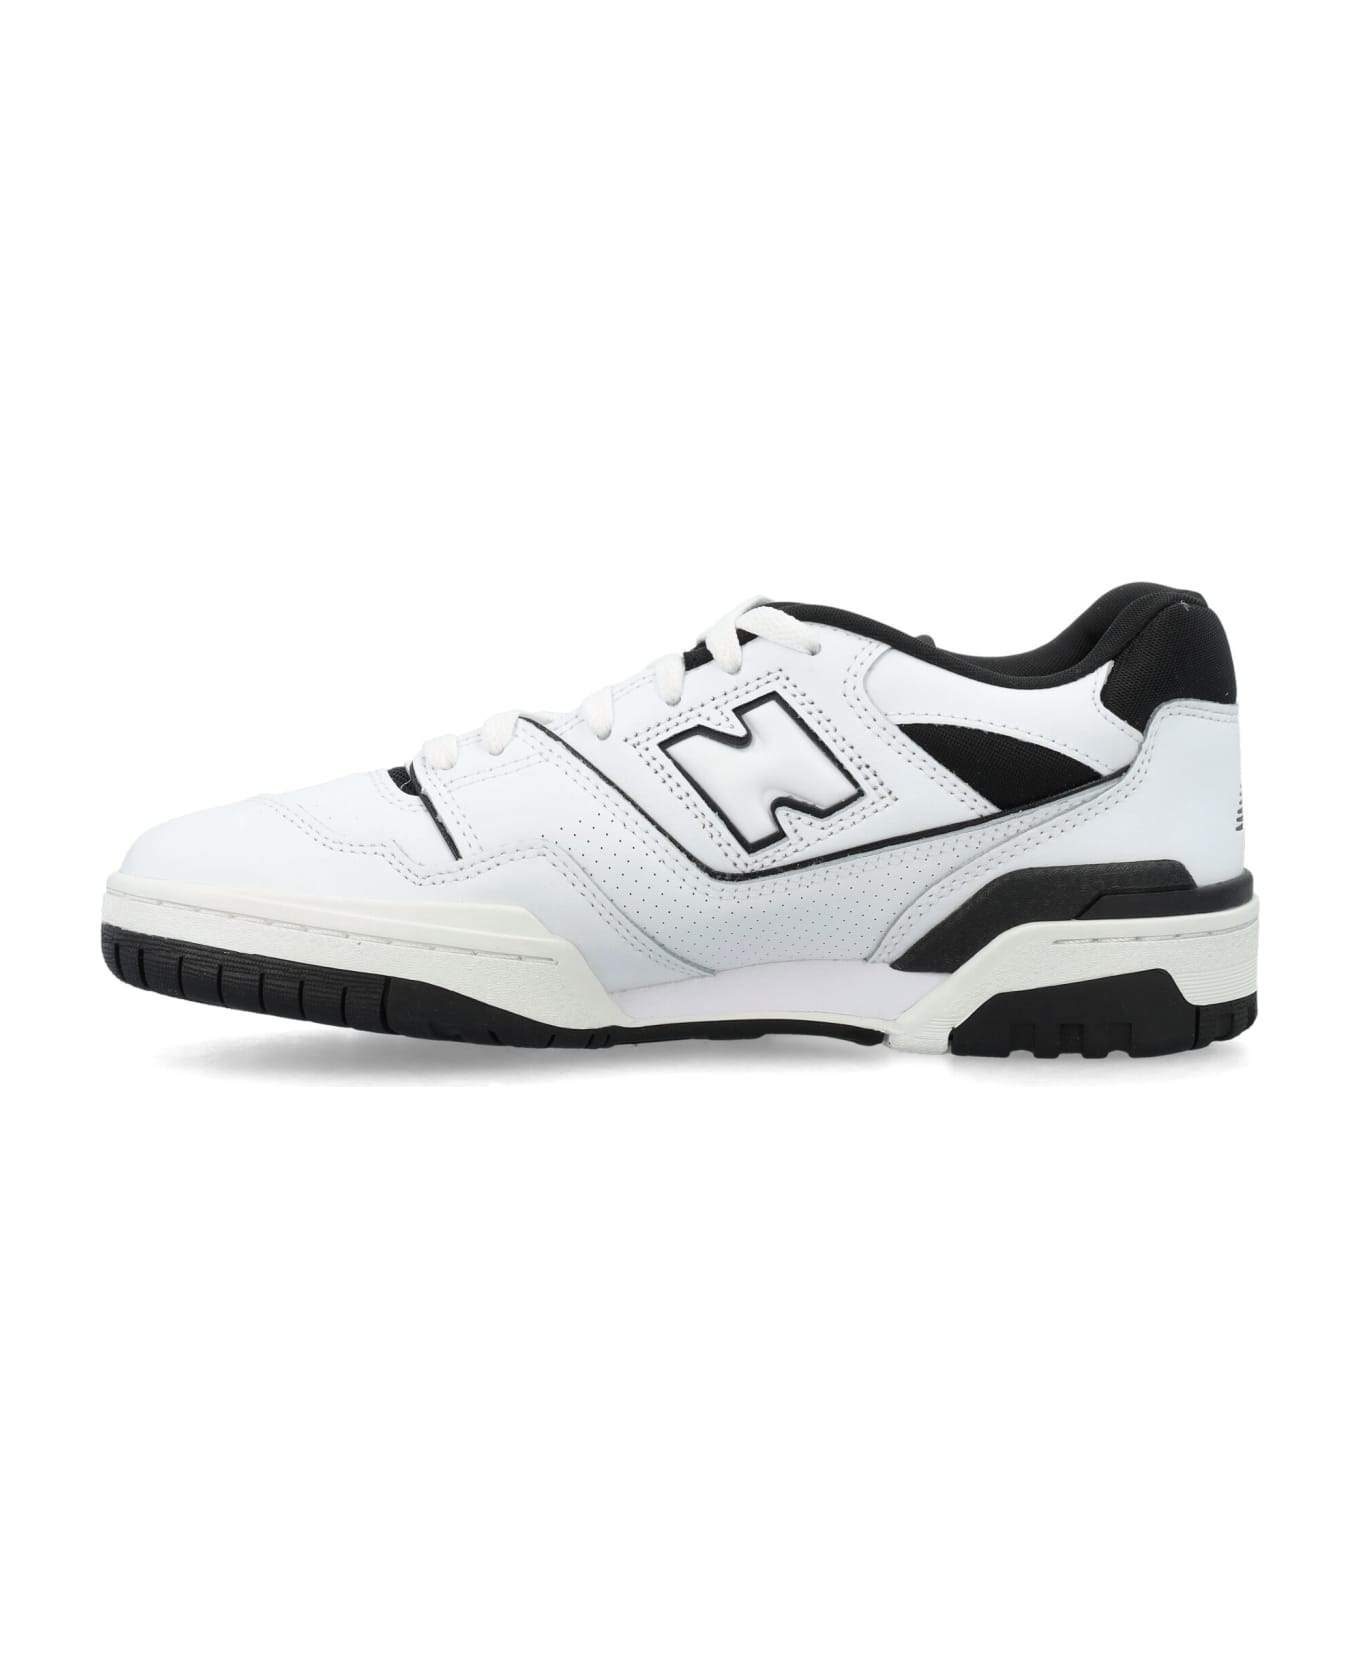 New Balance Bb550 Sneakers - WHITE BLACK スニーカー